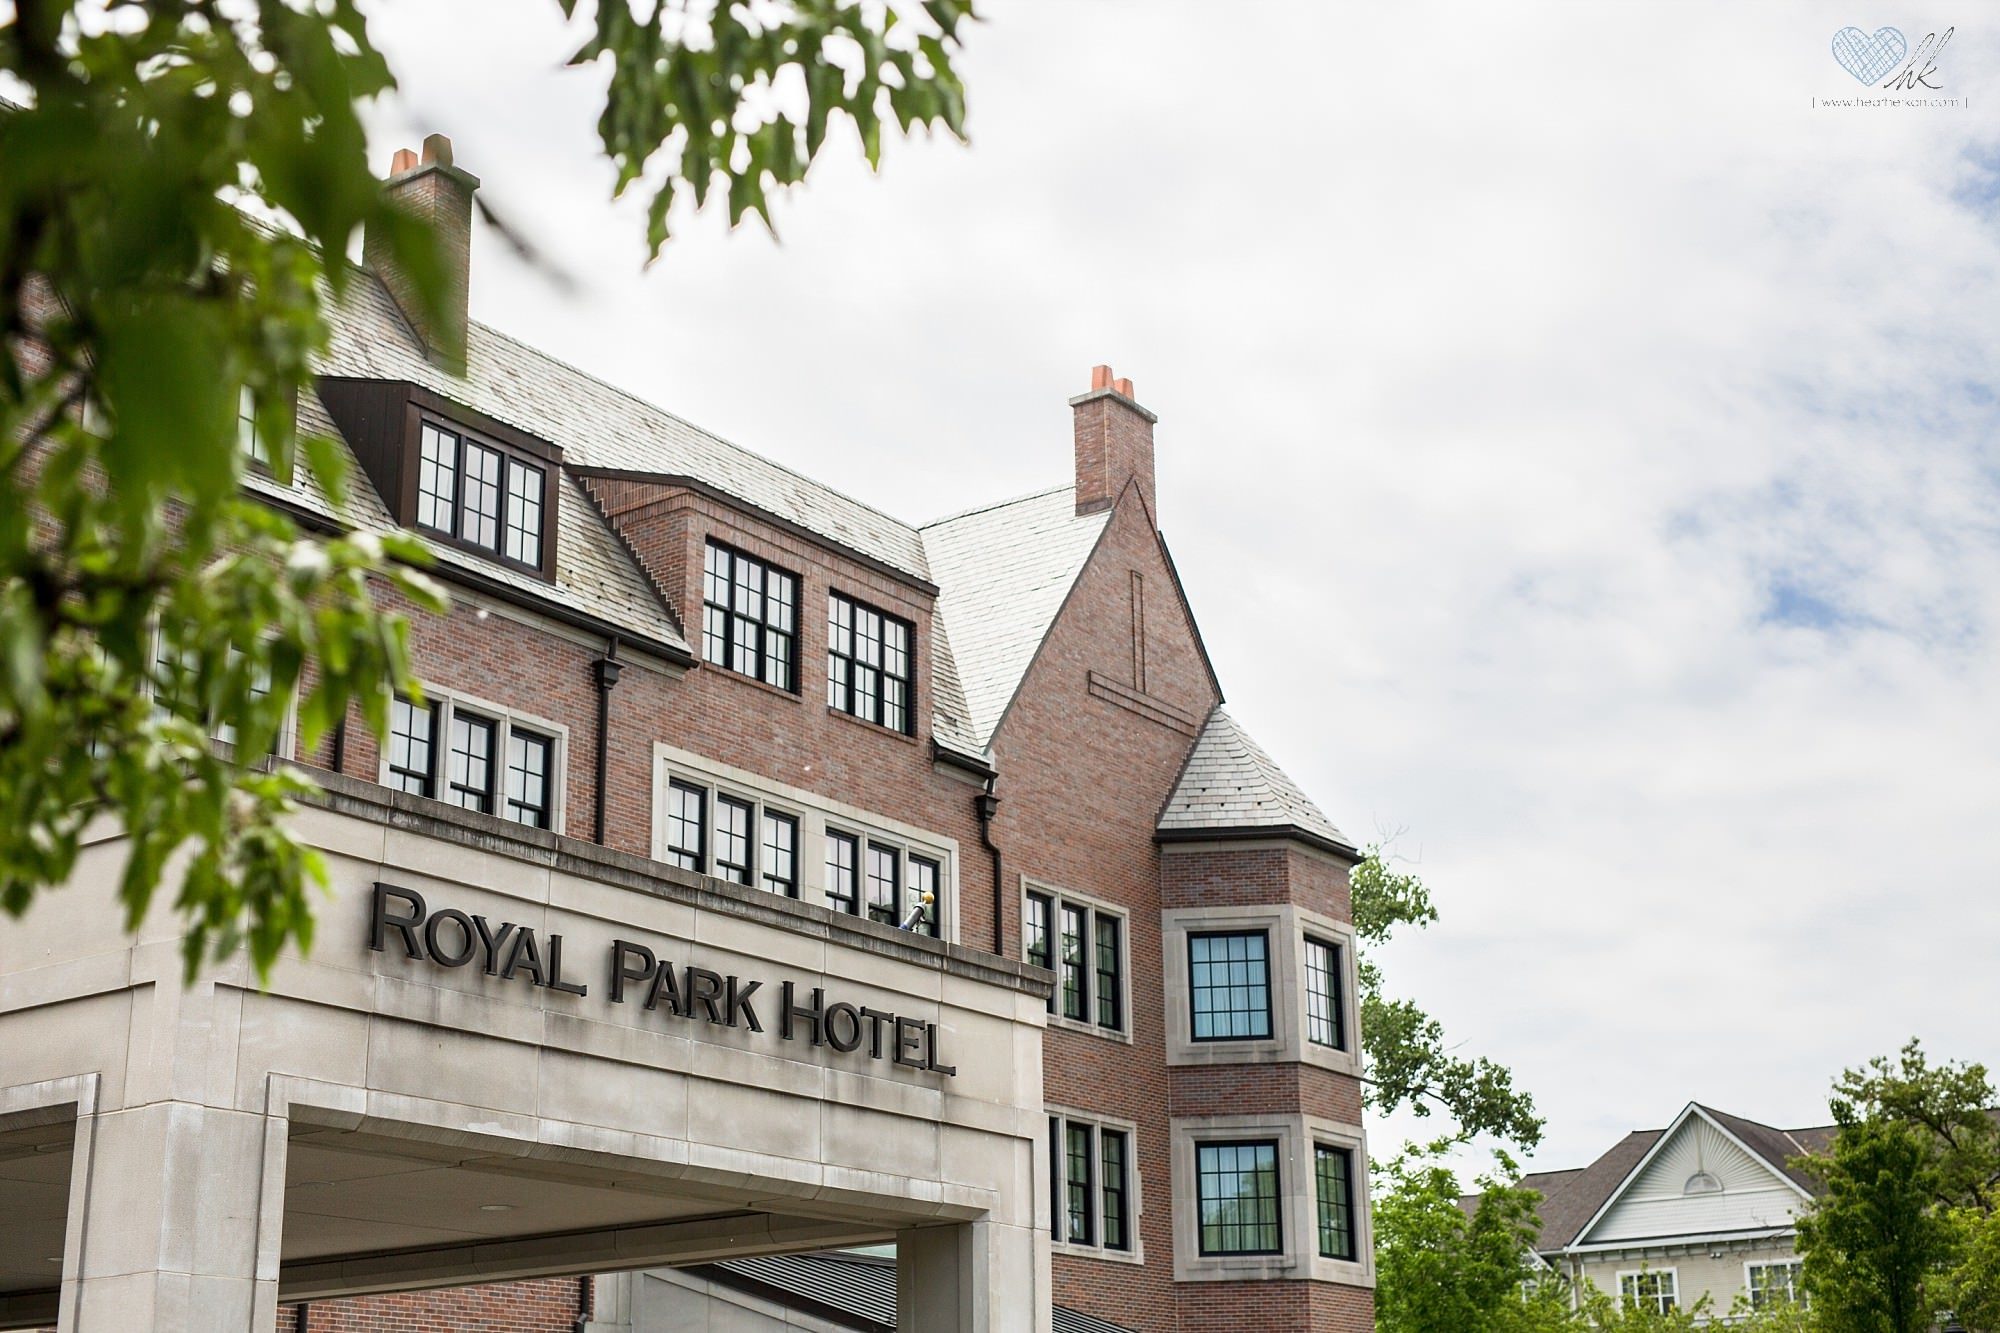 Royal Park Hotel, Rochester MI